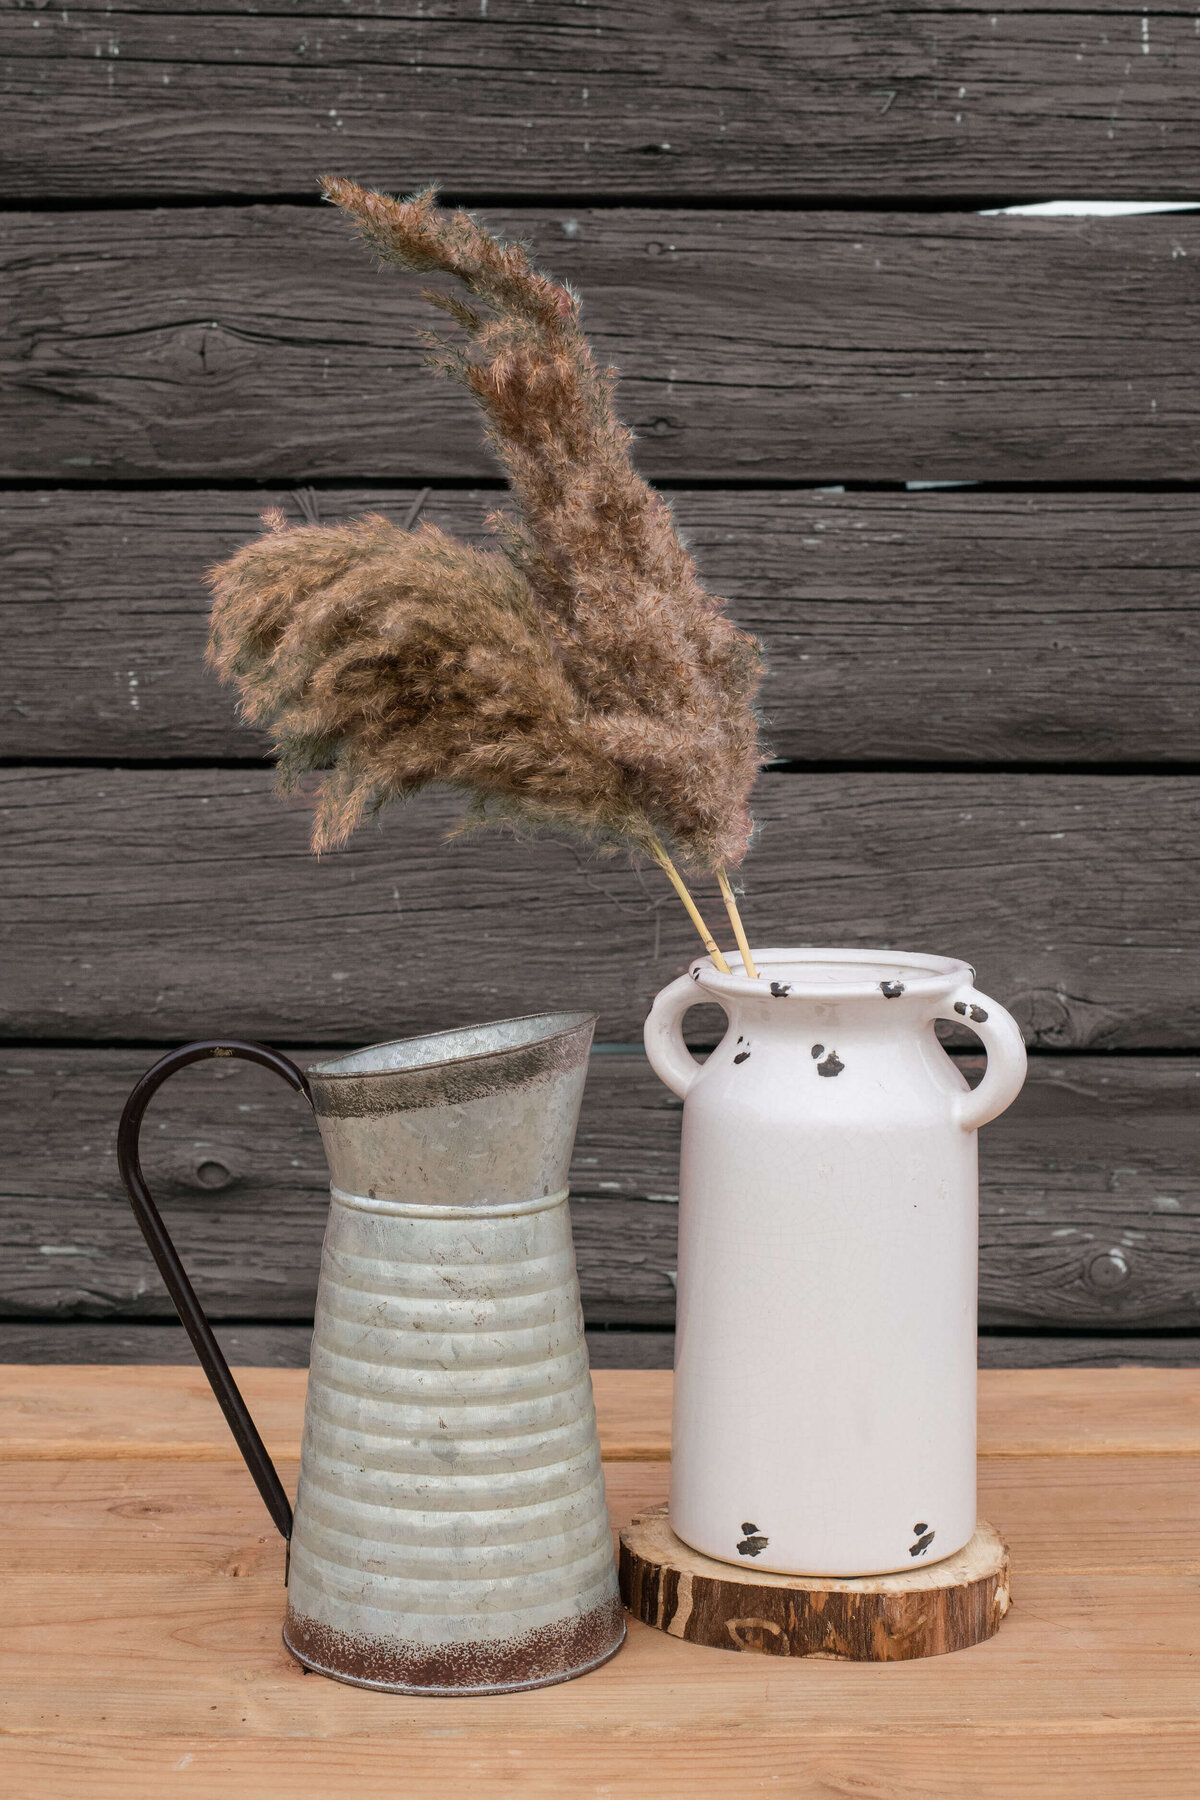 Tin pitcher and ceramic vase